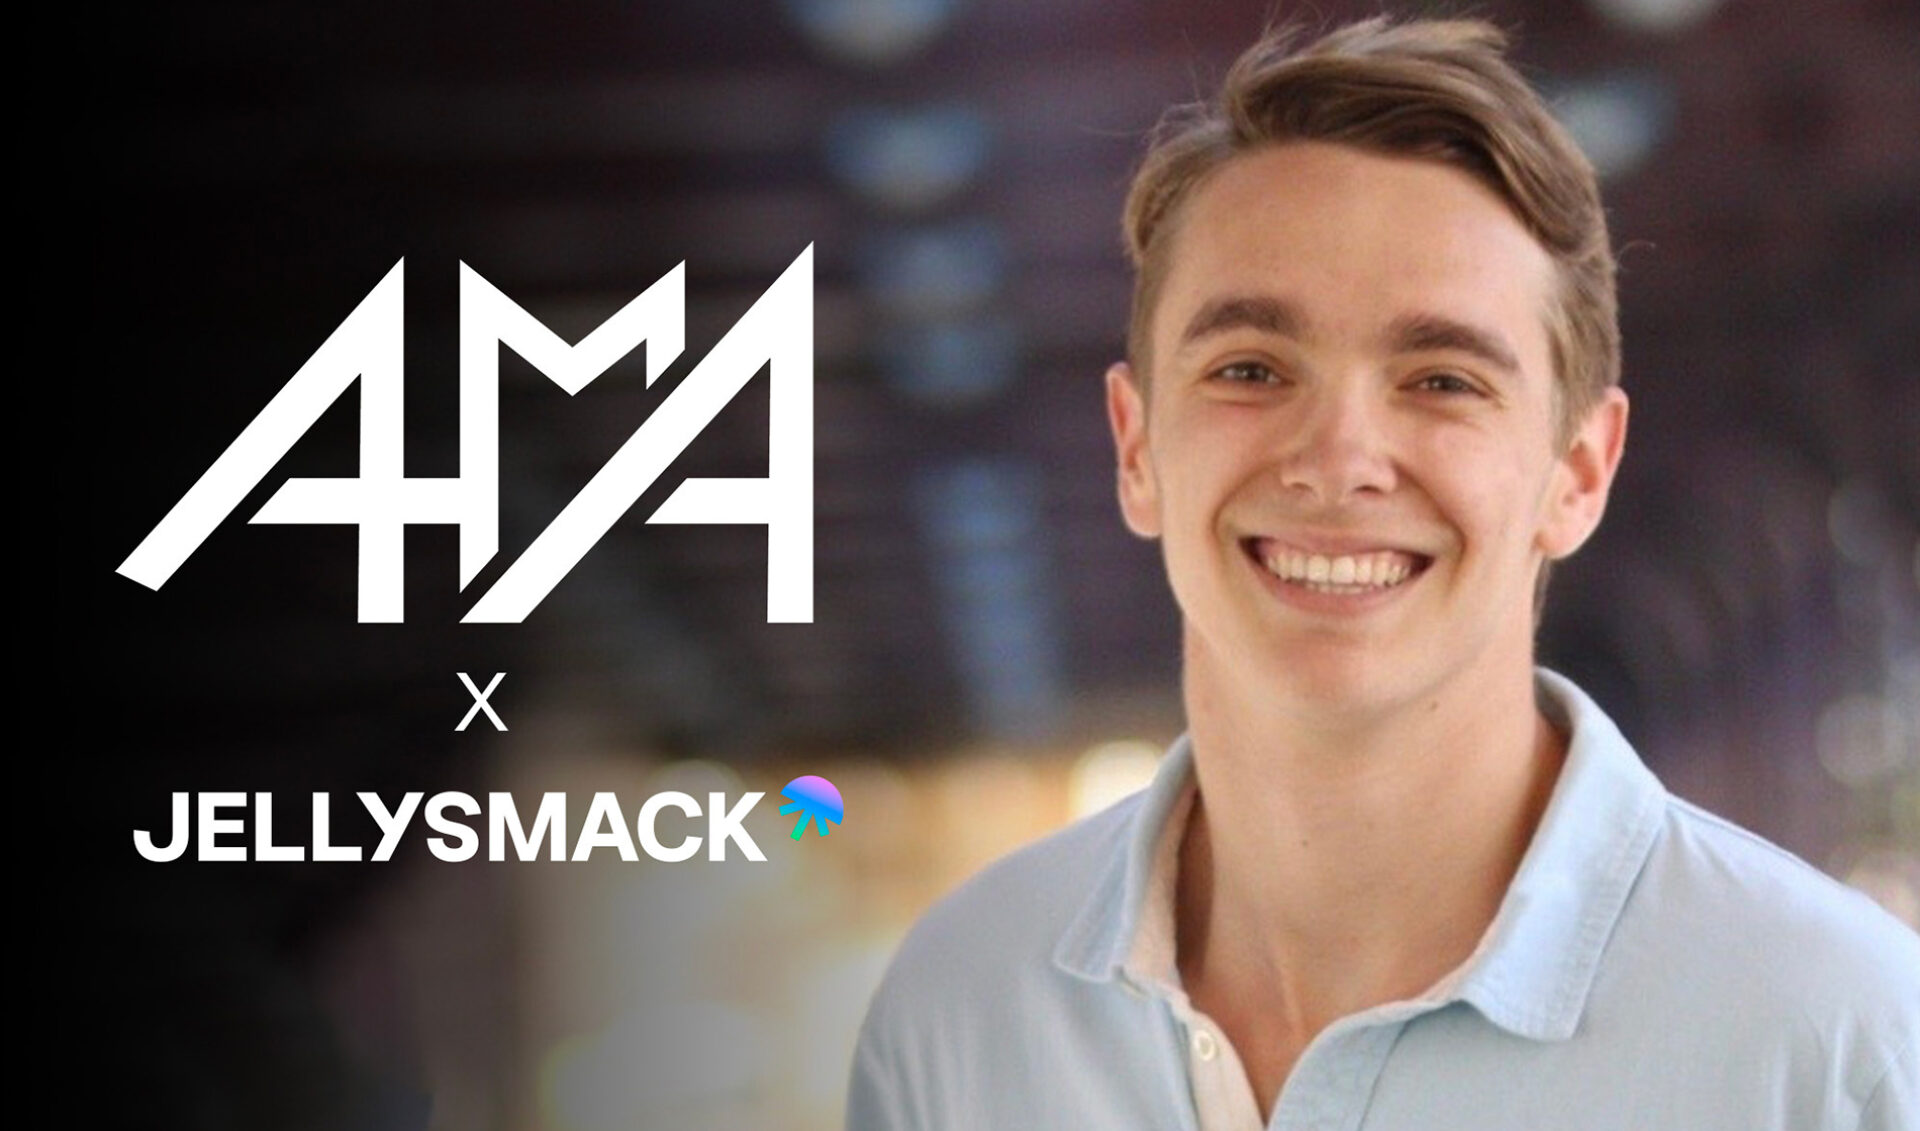 Jellysmack acquires YouTube analytics startup AMA Digital